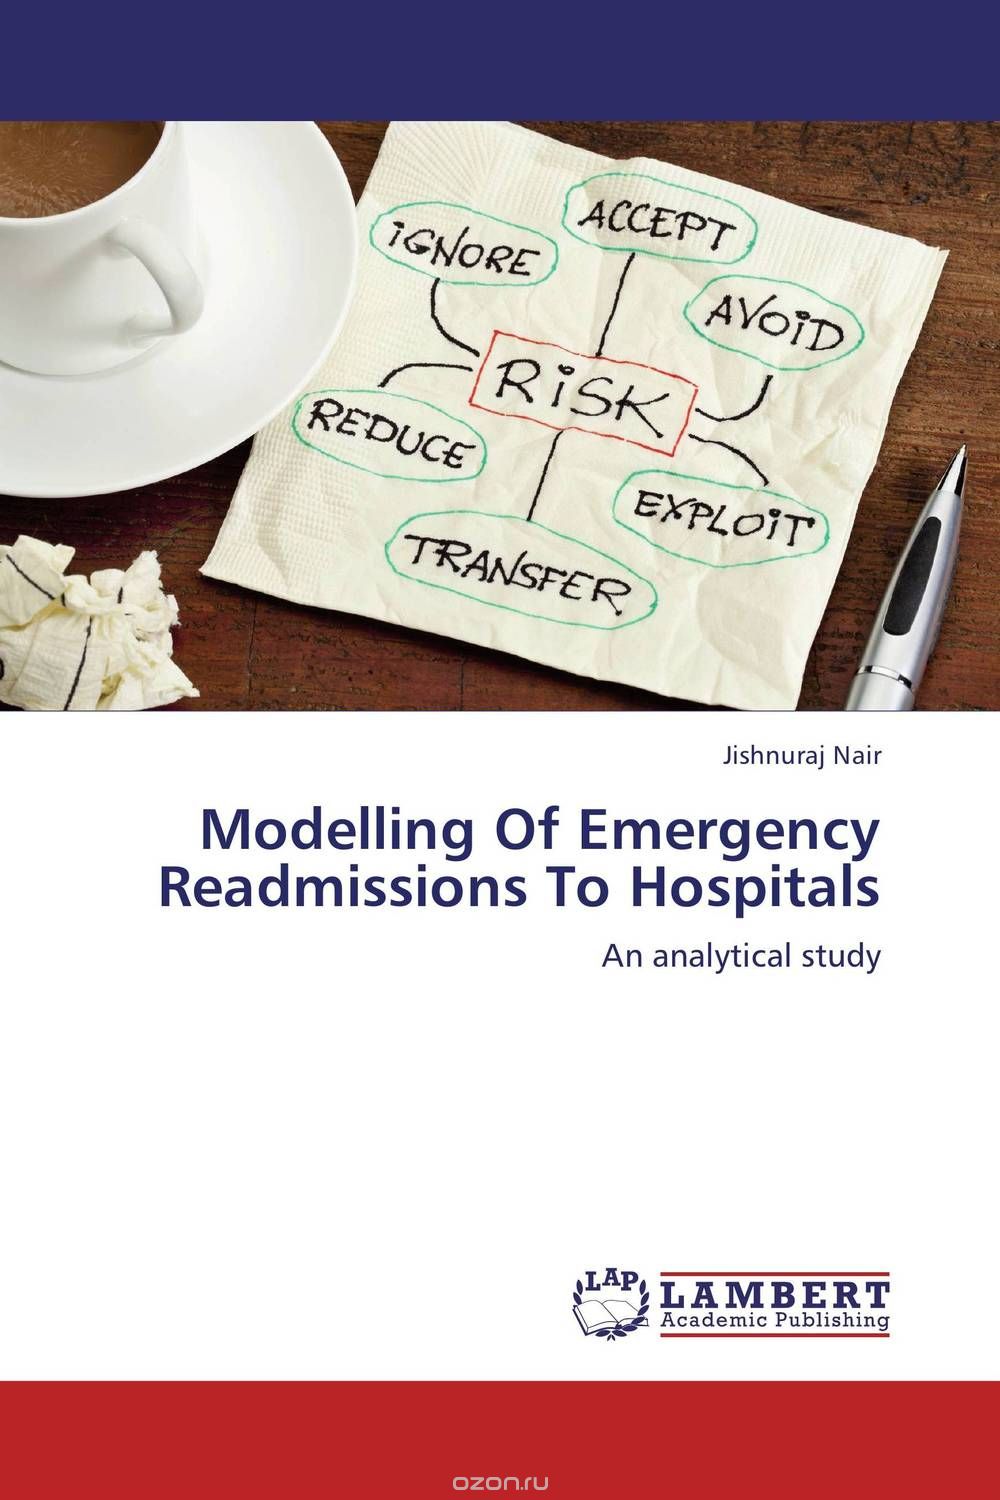 Скачать книгу "Modelling Of Emergency Readmissions To Hospitals"